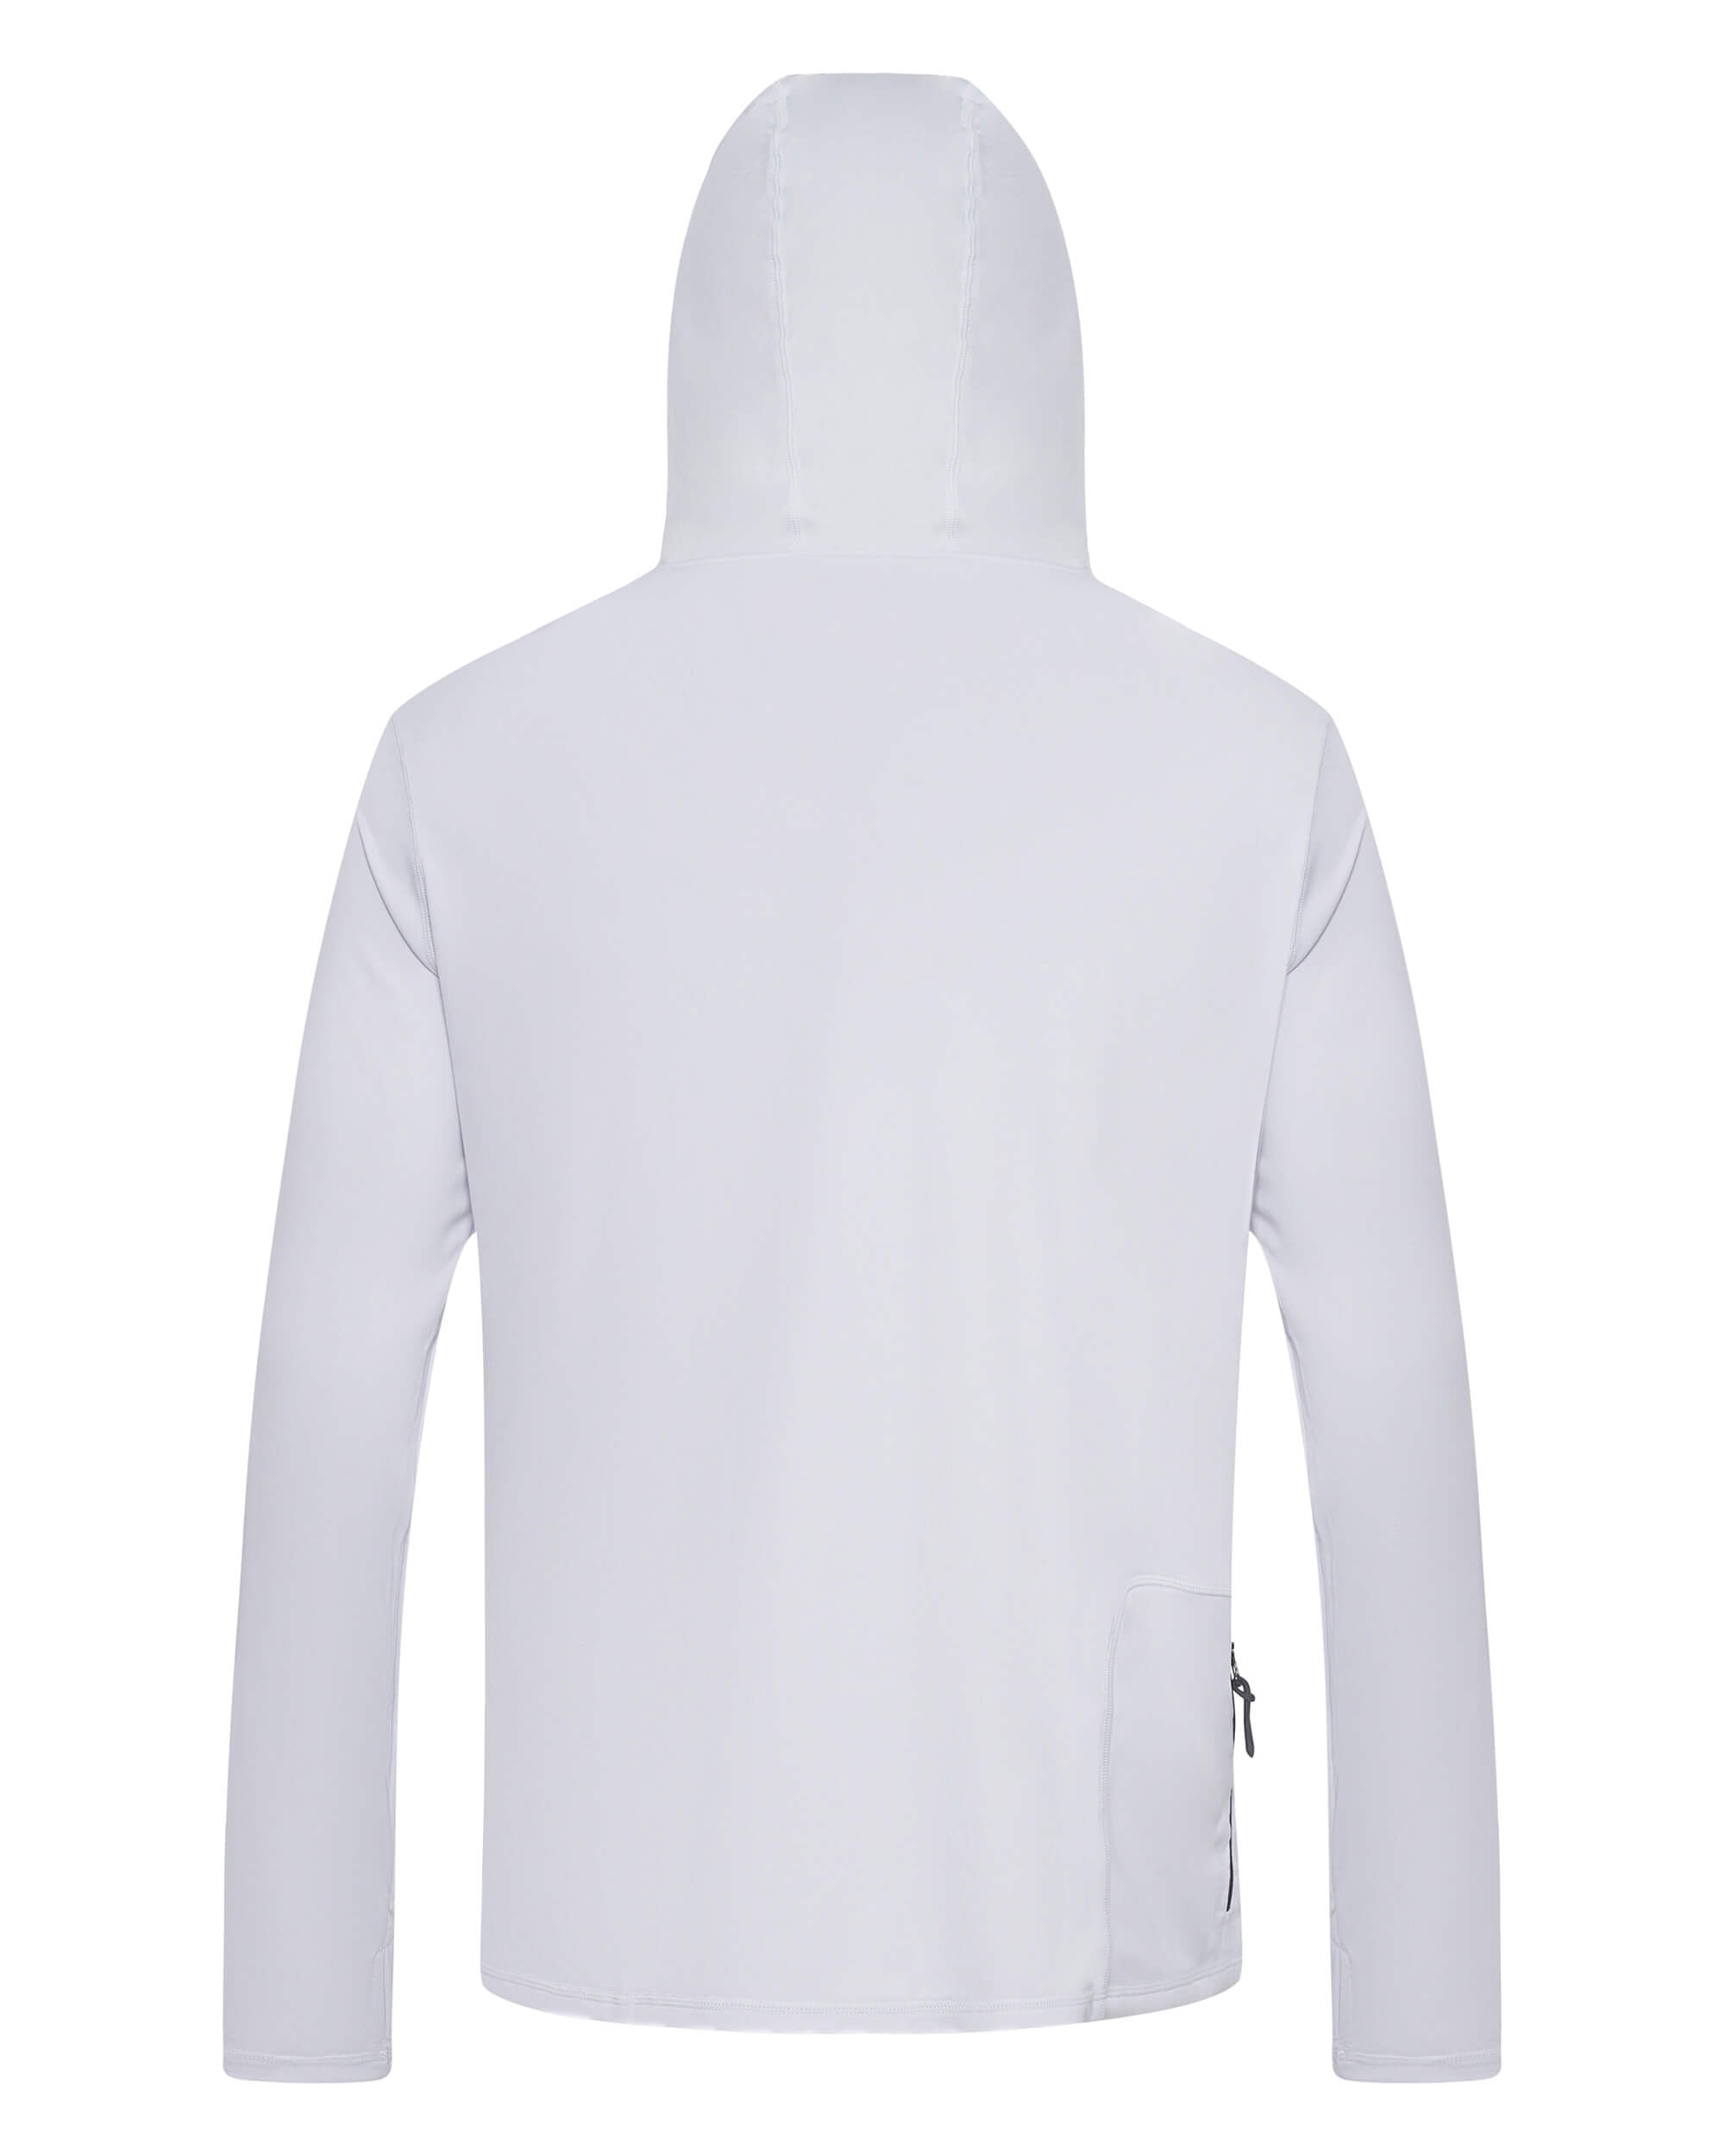 Sun Hoodie - SPF/UPF 30+ Sun Protection Shirt Men's, White / XXL